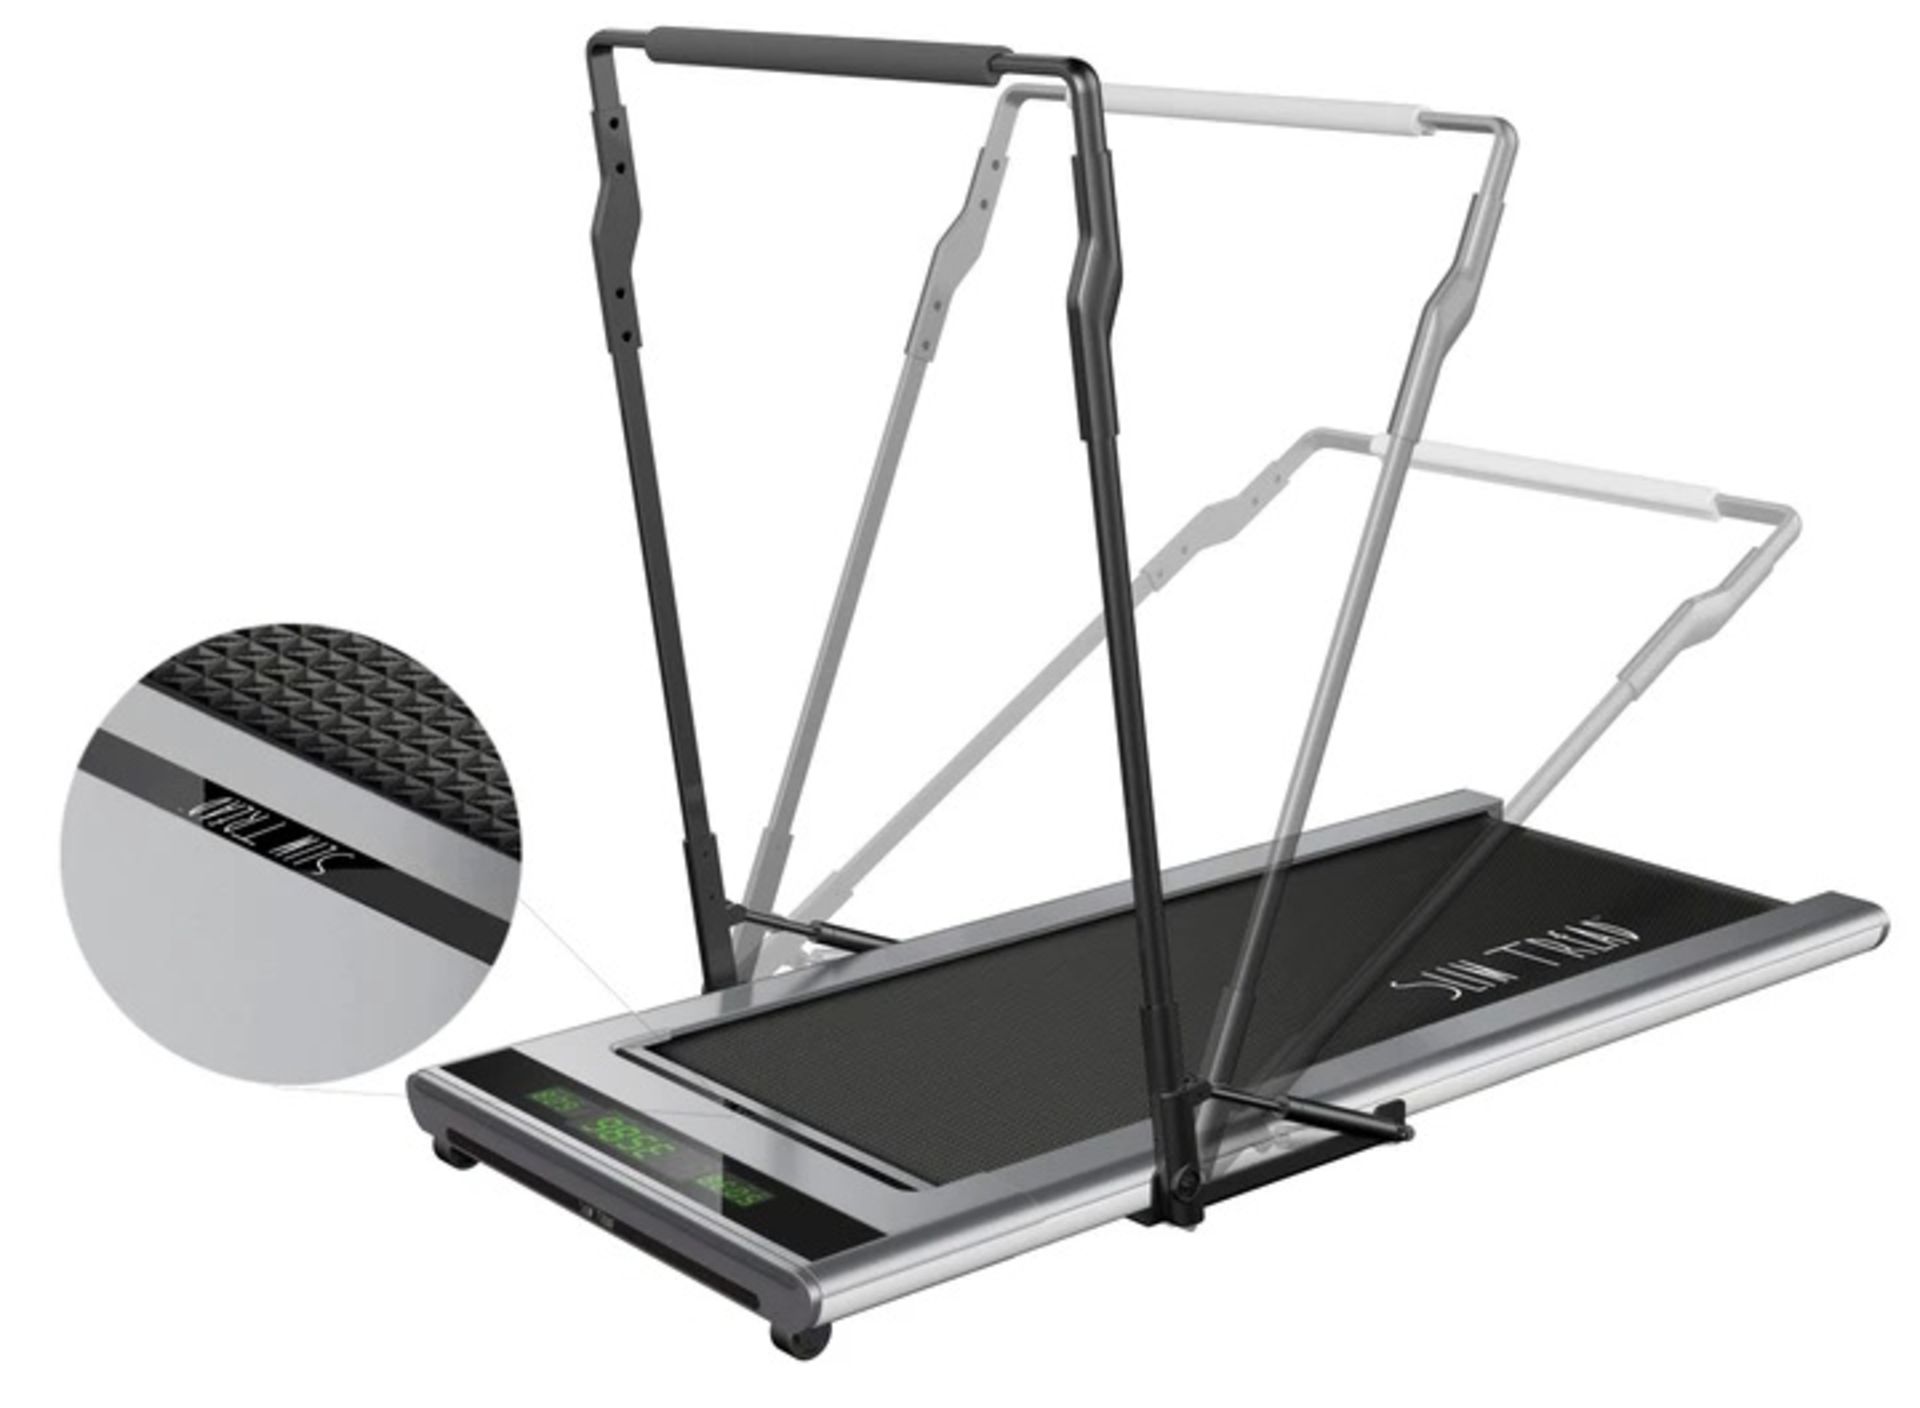 1 x Slim Tread Ultra Thin Smart Treadmill Running Machine - Brand New Sealed Stock - RRP £799! - Image 15 of 19